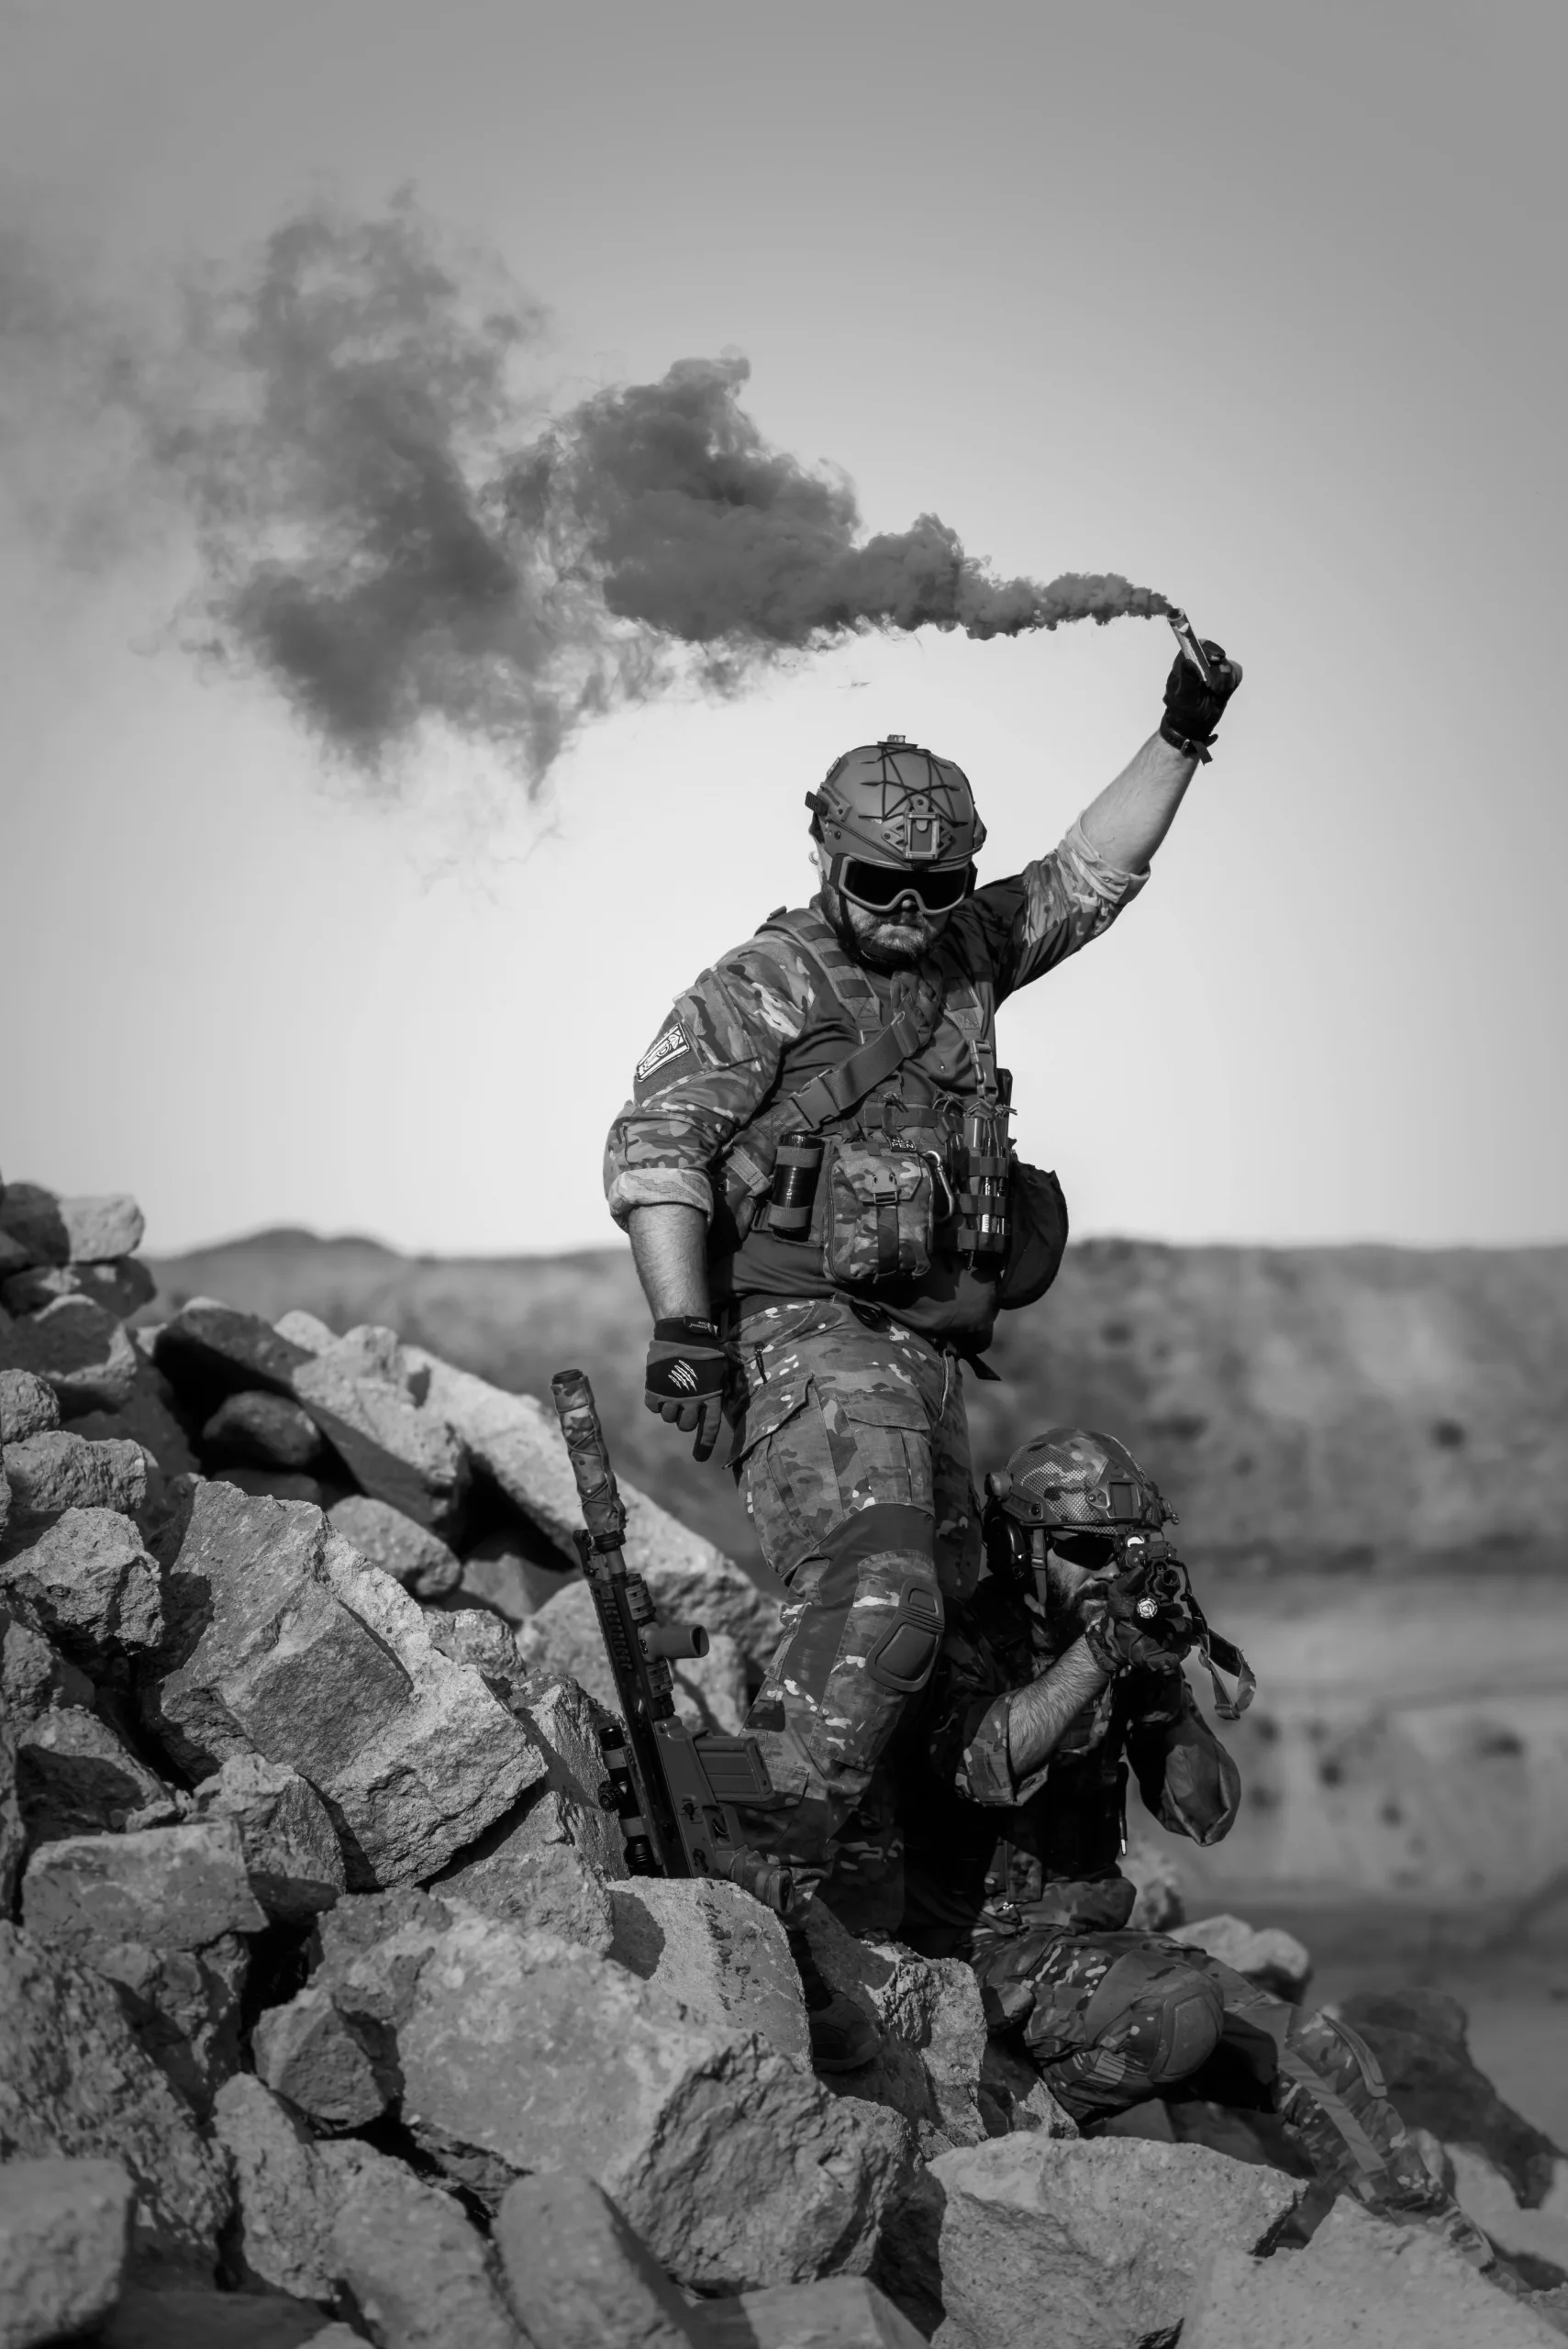 Soldiers at war throwing a smoke grenade.